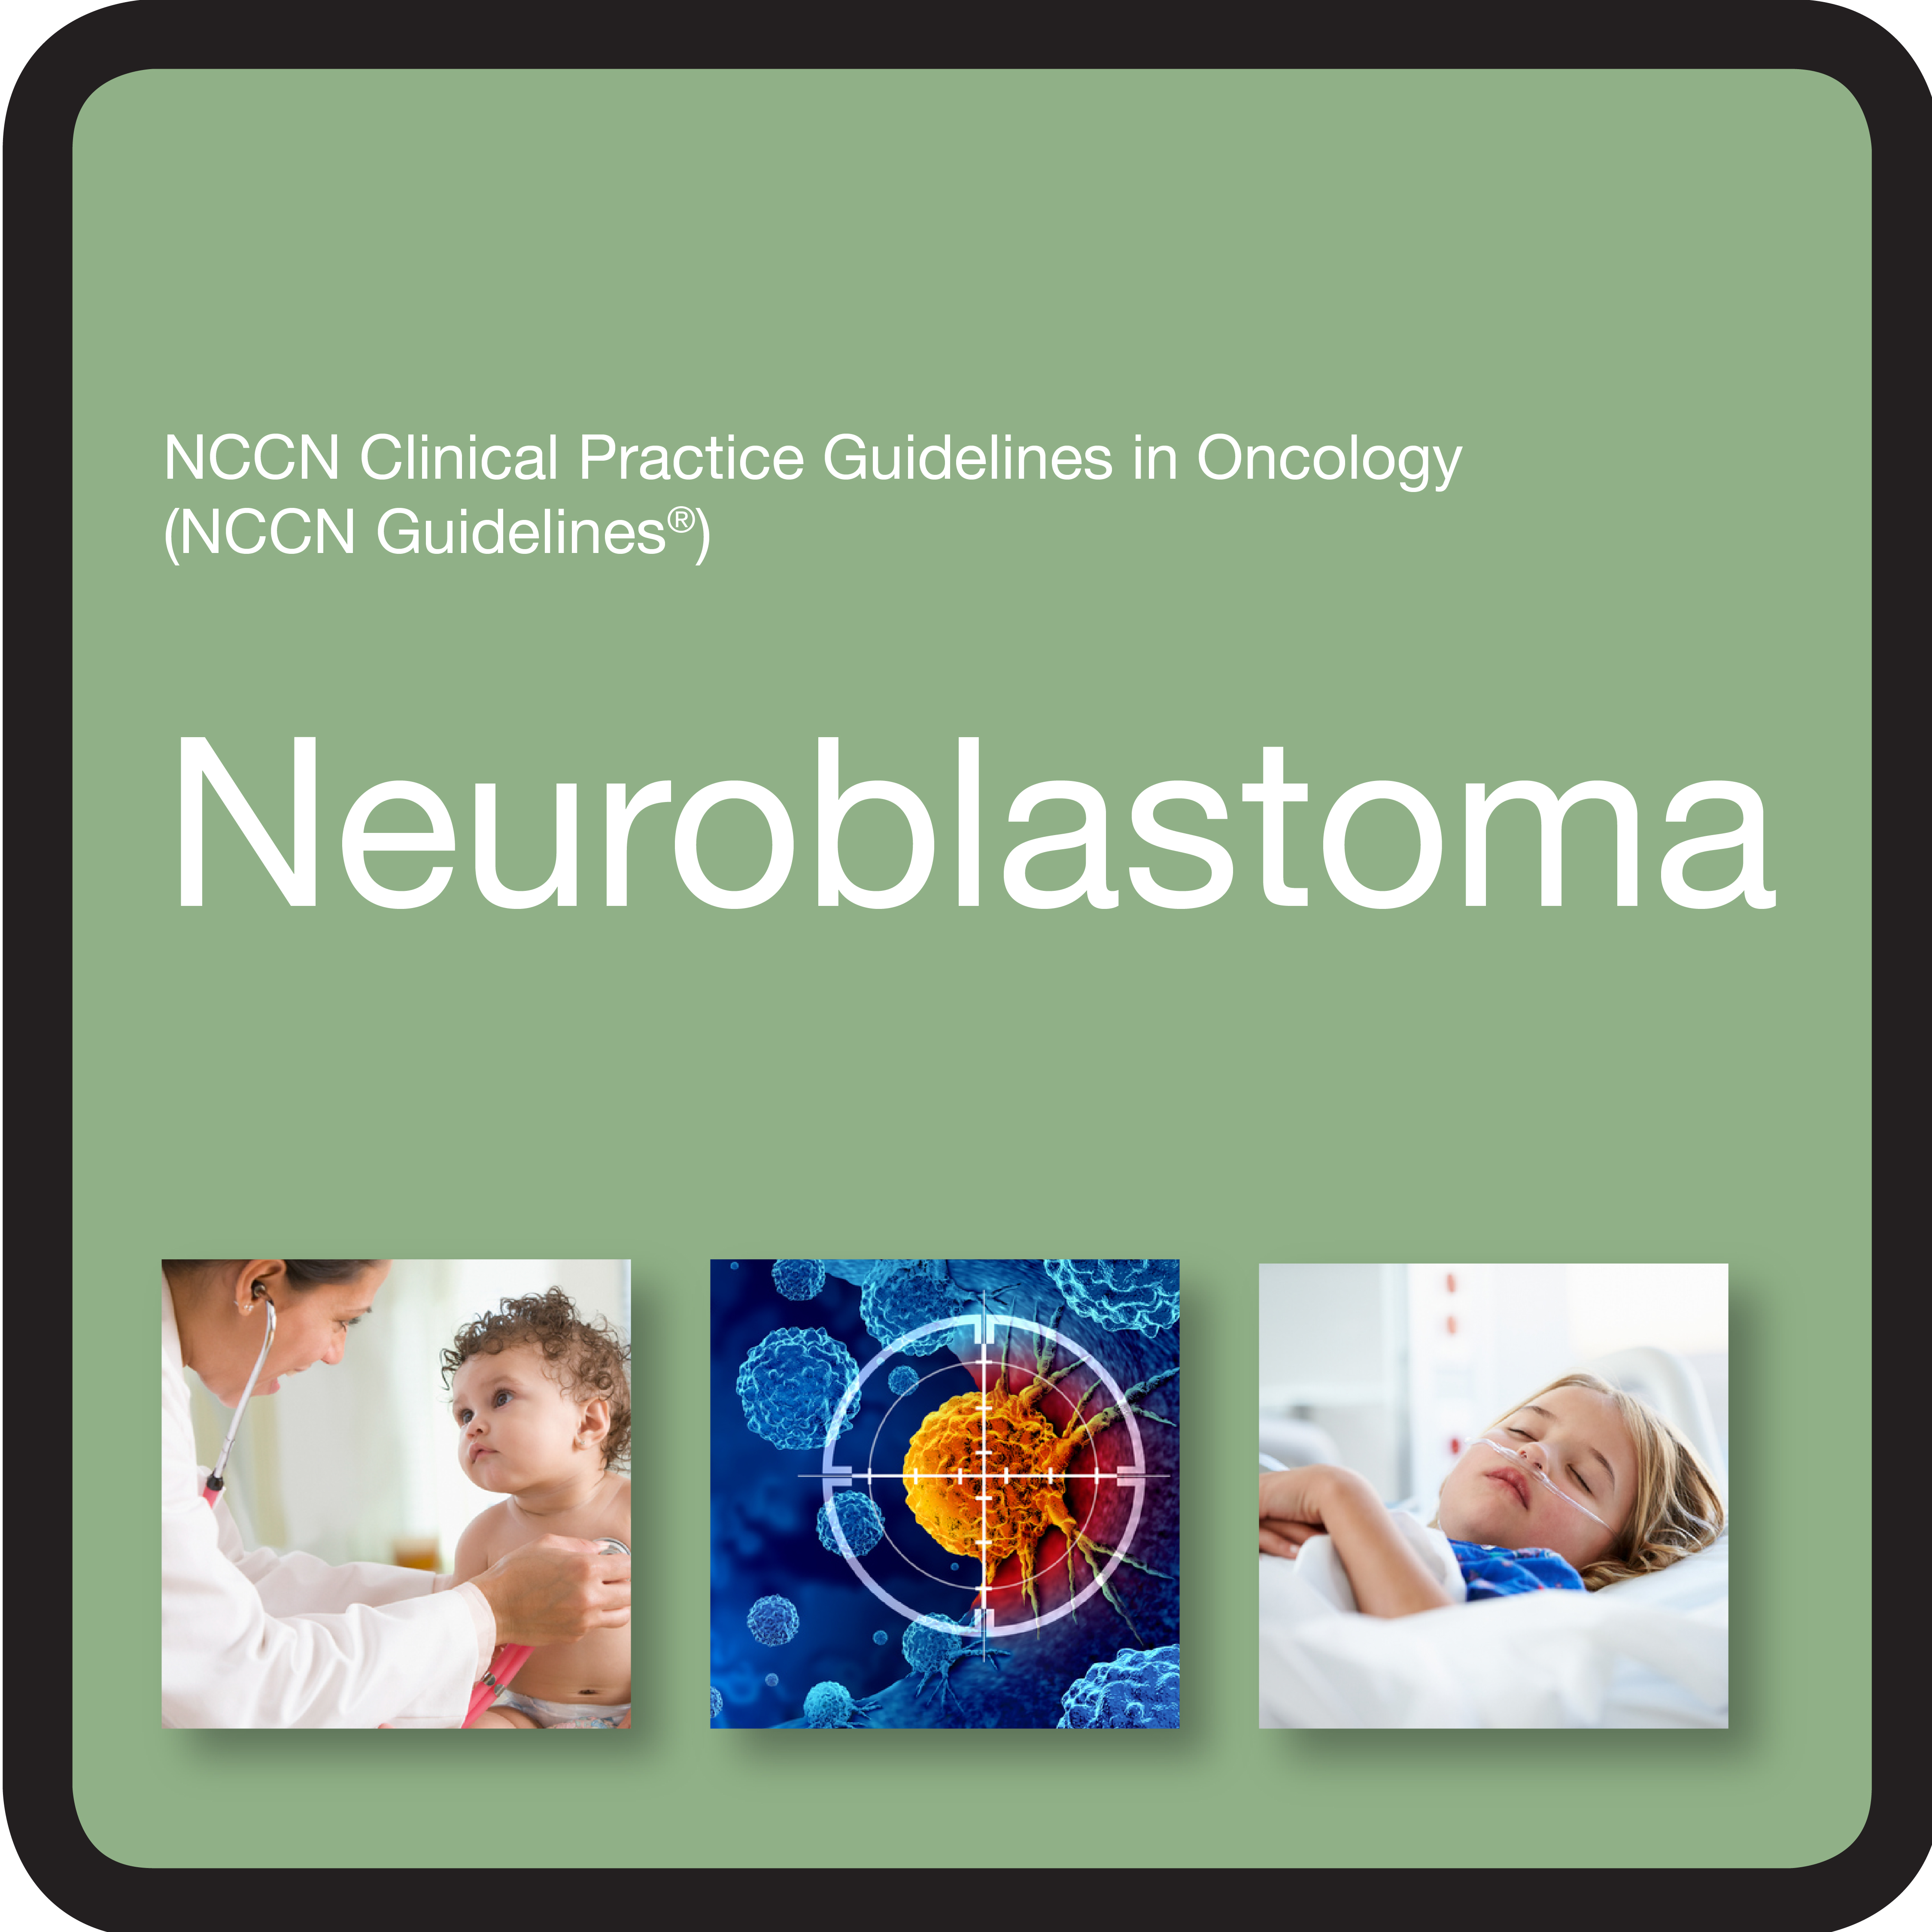 NCCN Guidelines for Neuroblastoma